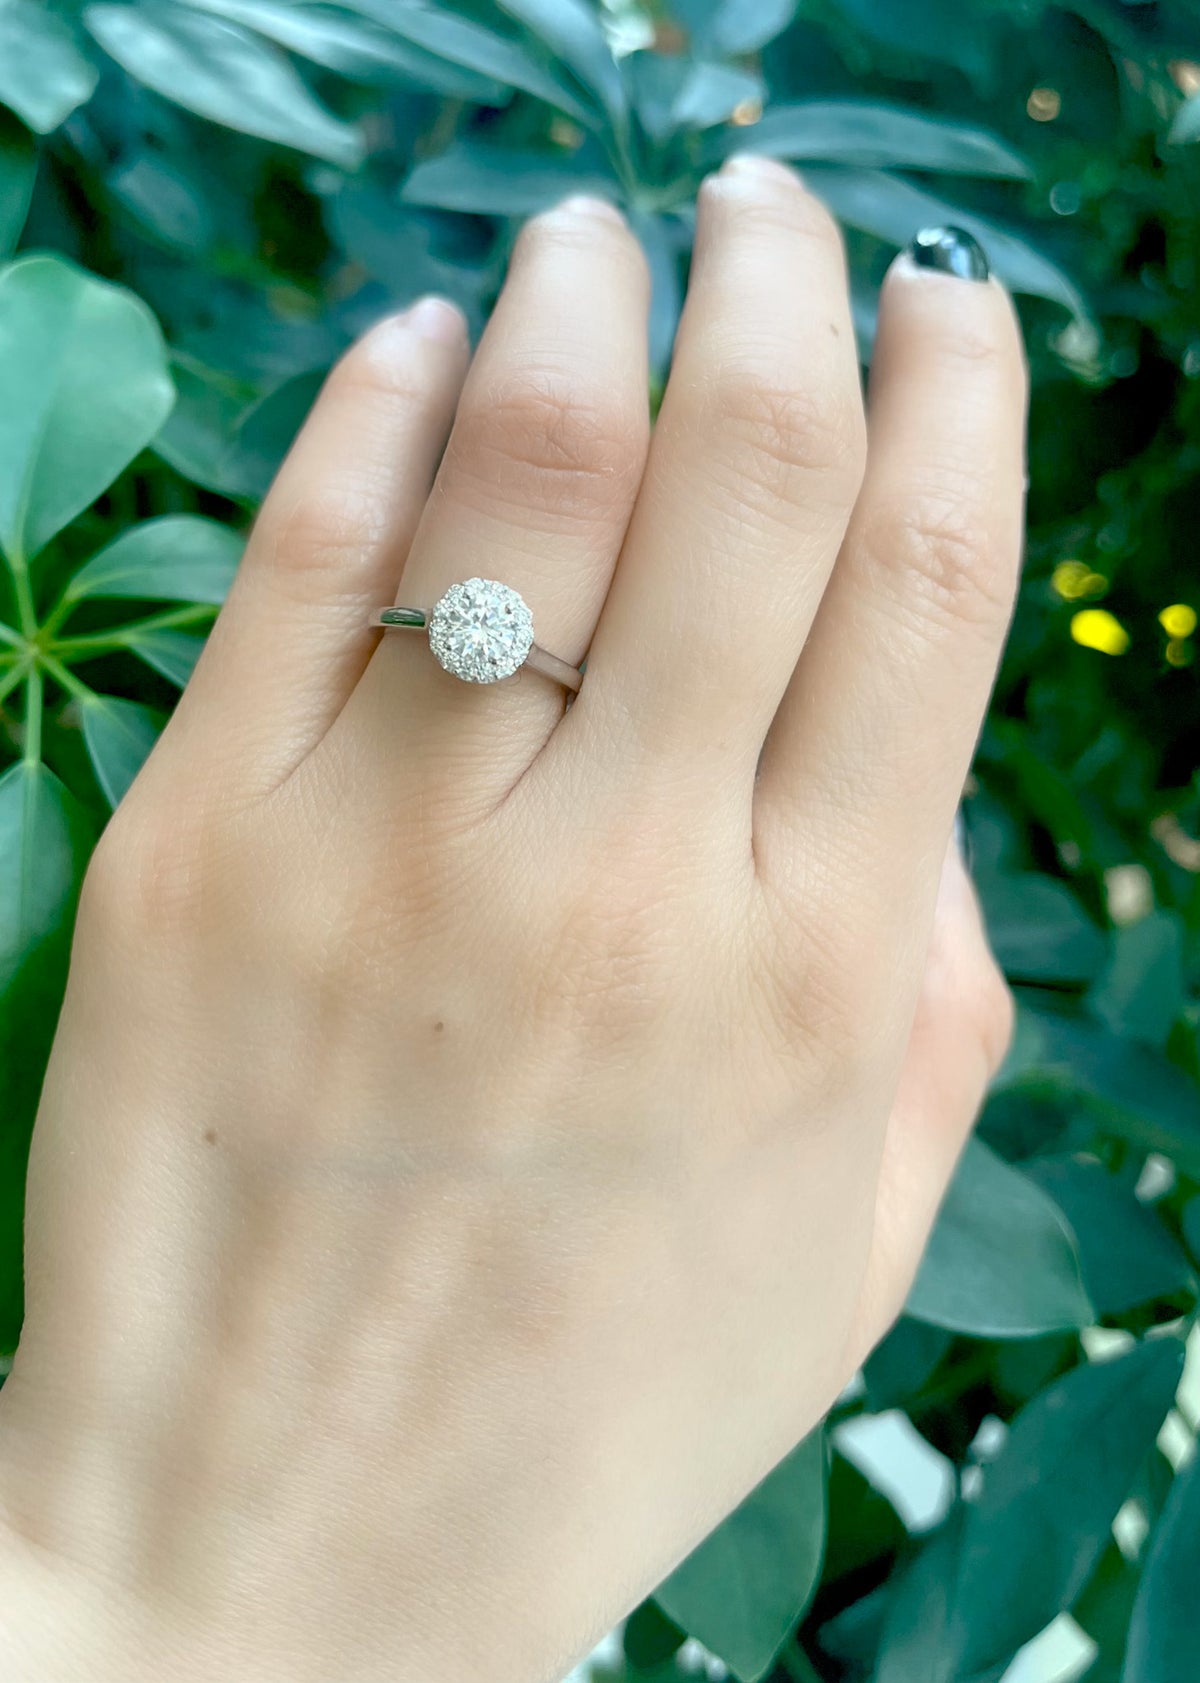 14K White Gold 0.75cttw Diamond Engagement Ring, Size 6